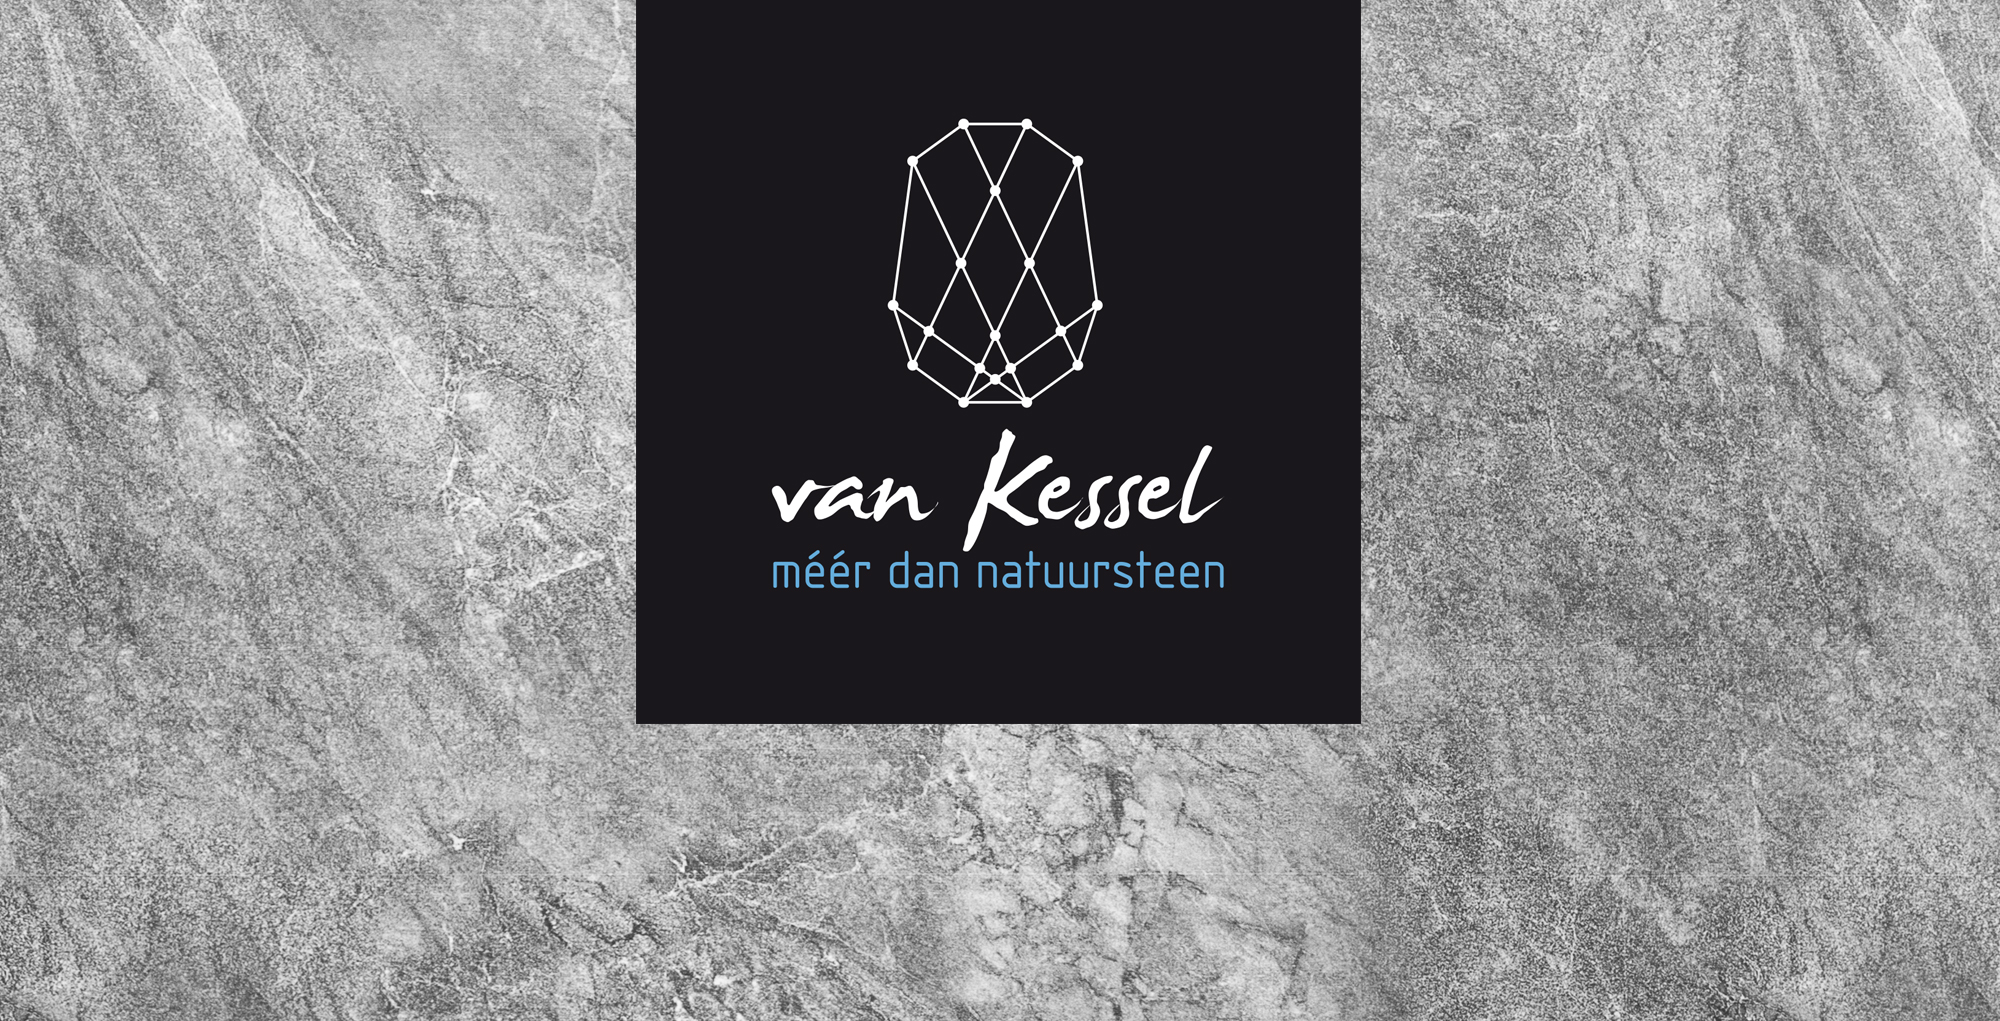 Spiegel crossmedia communicatie - Van Kessel